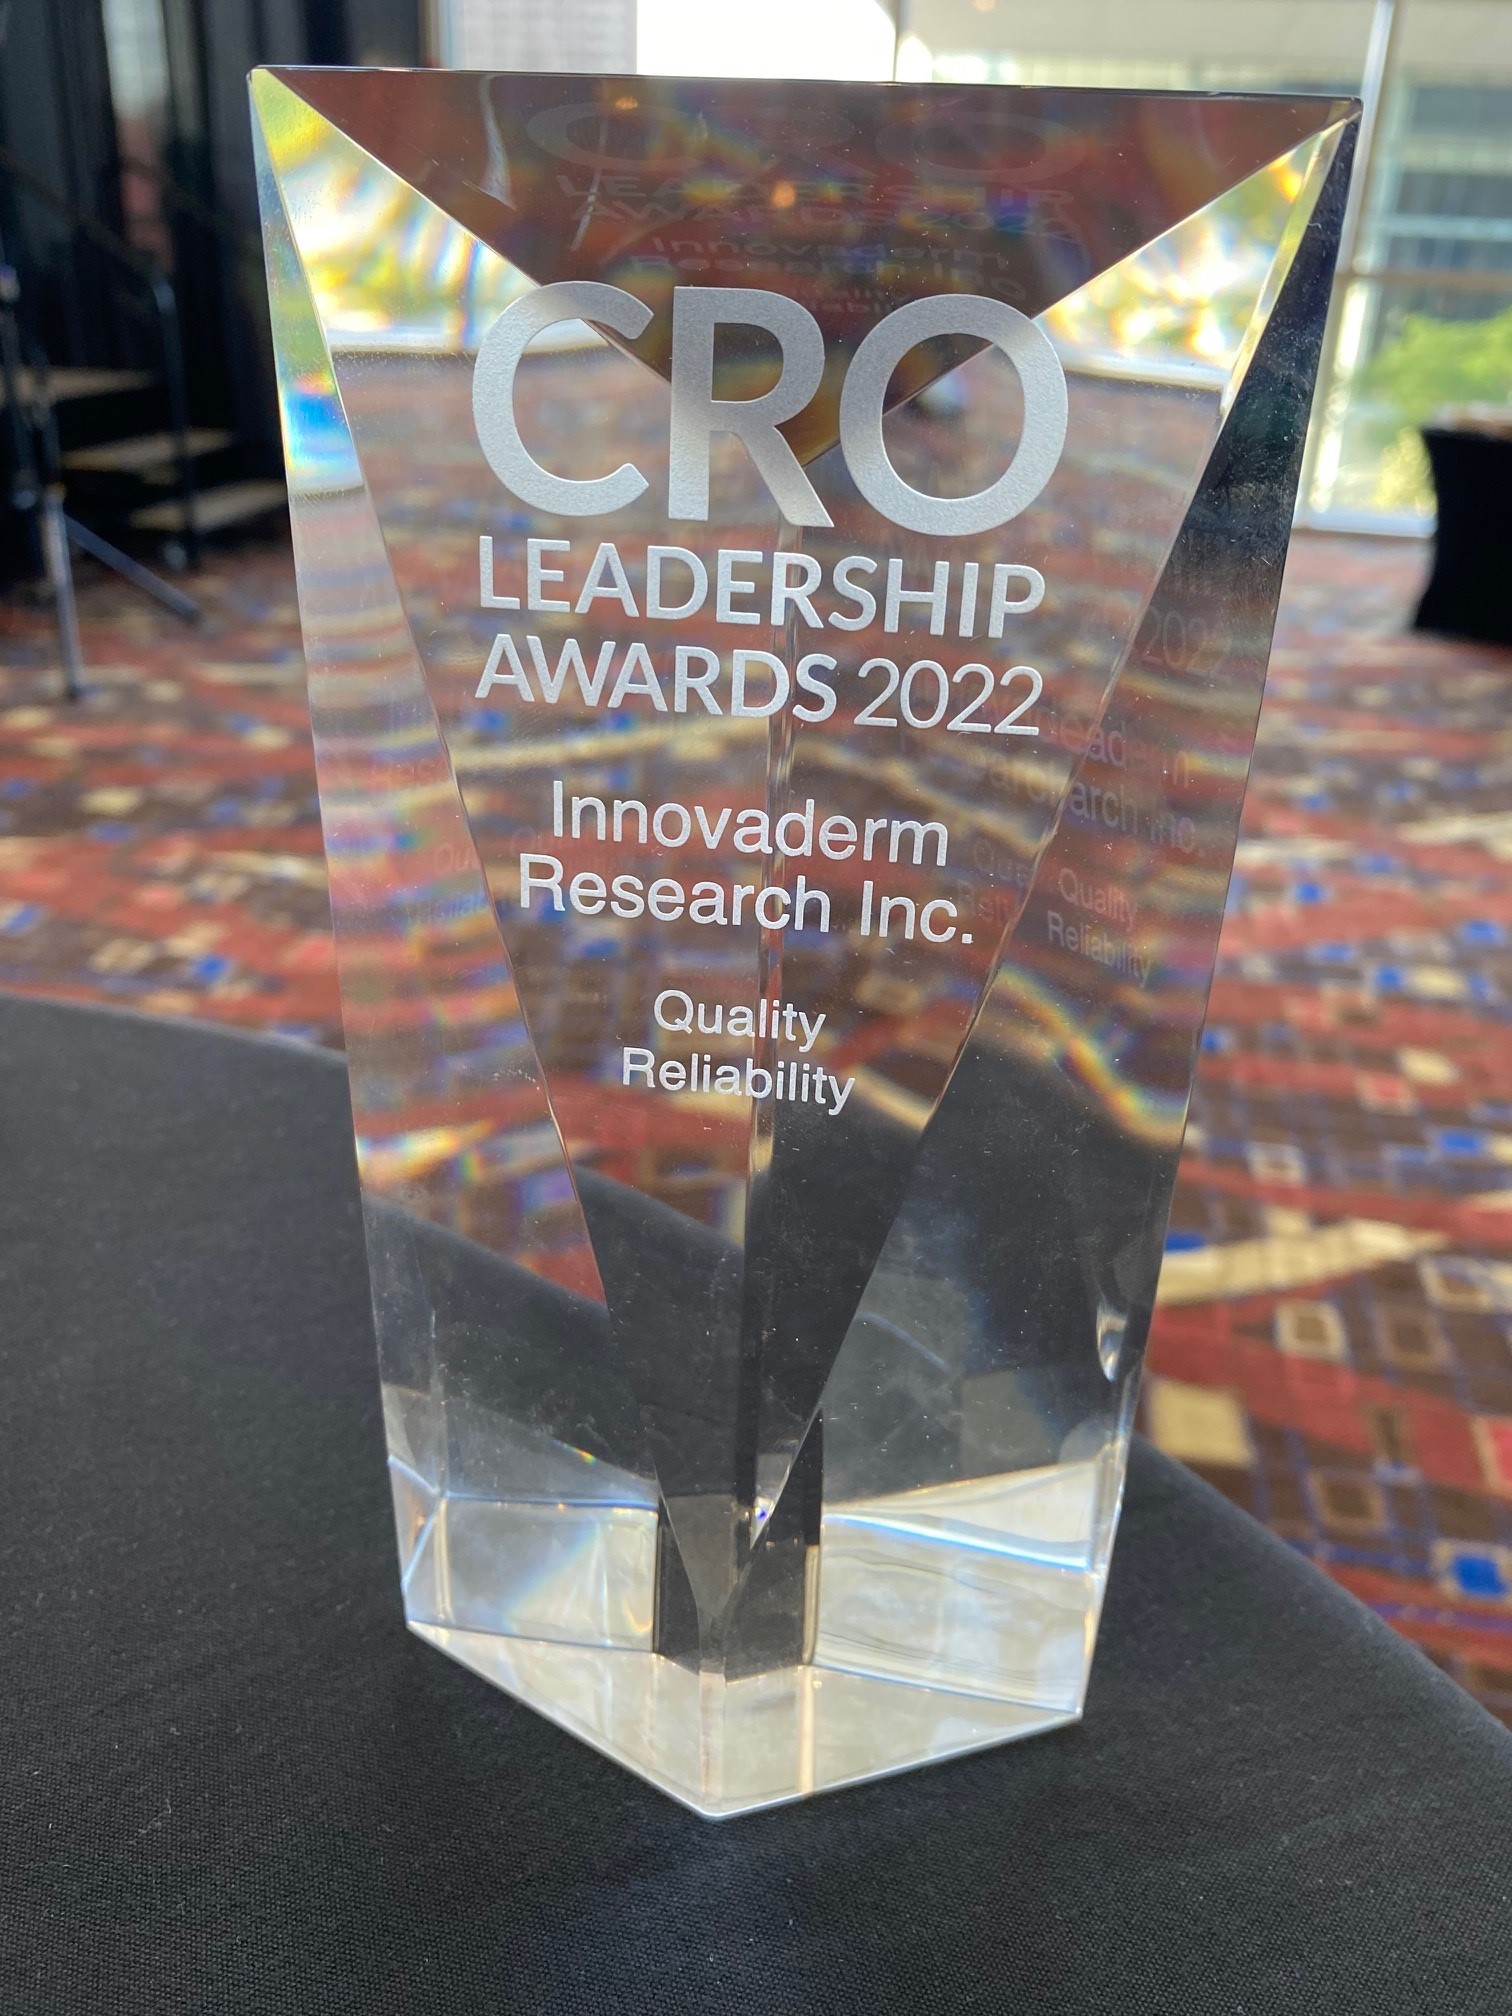 CRO leadership awards 2022